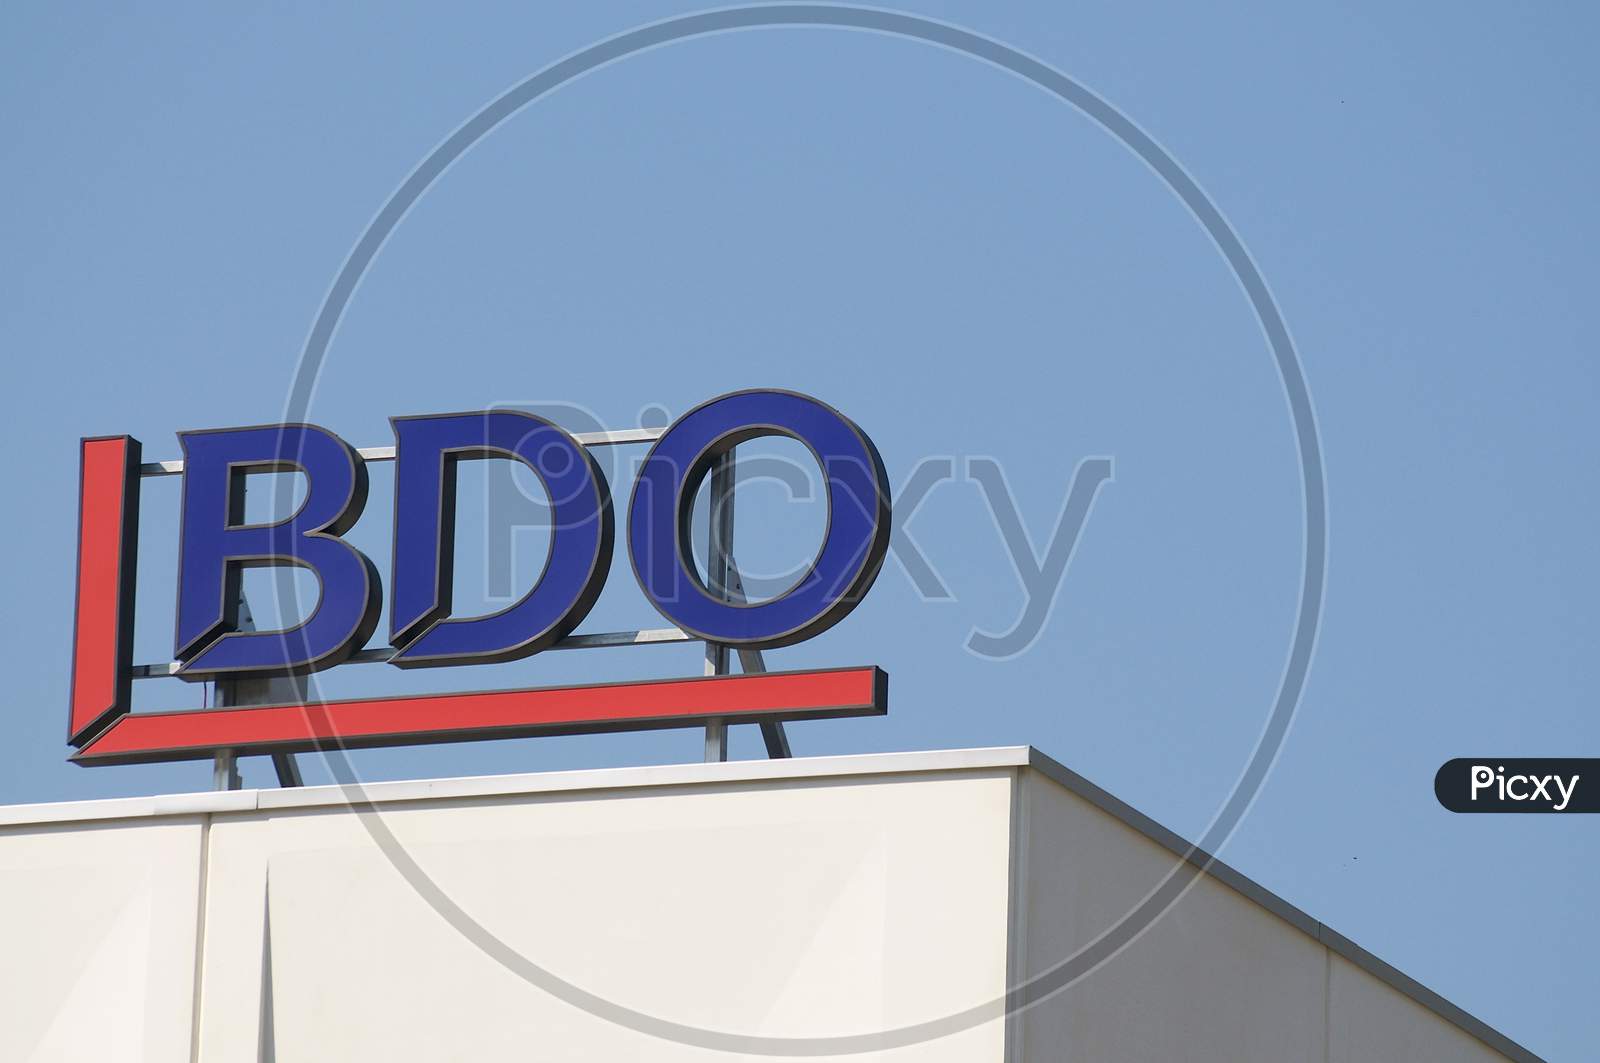 Bdo Logo On A Building In Switzerland